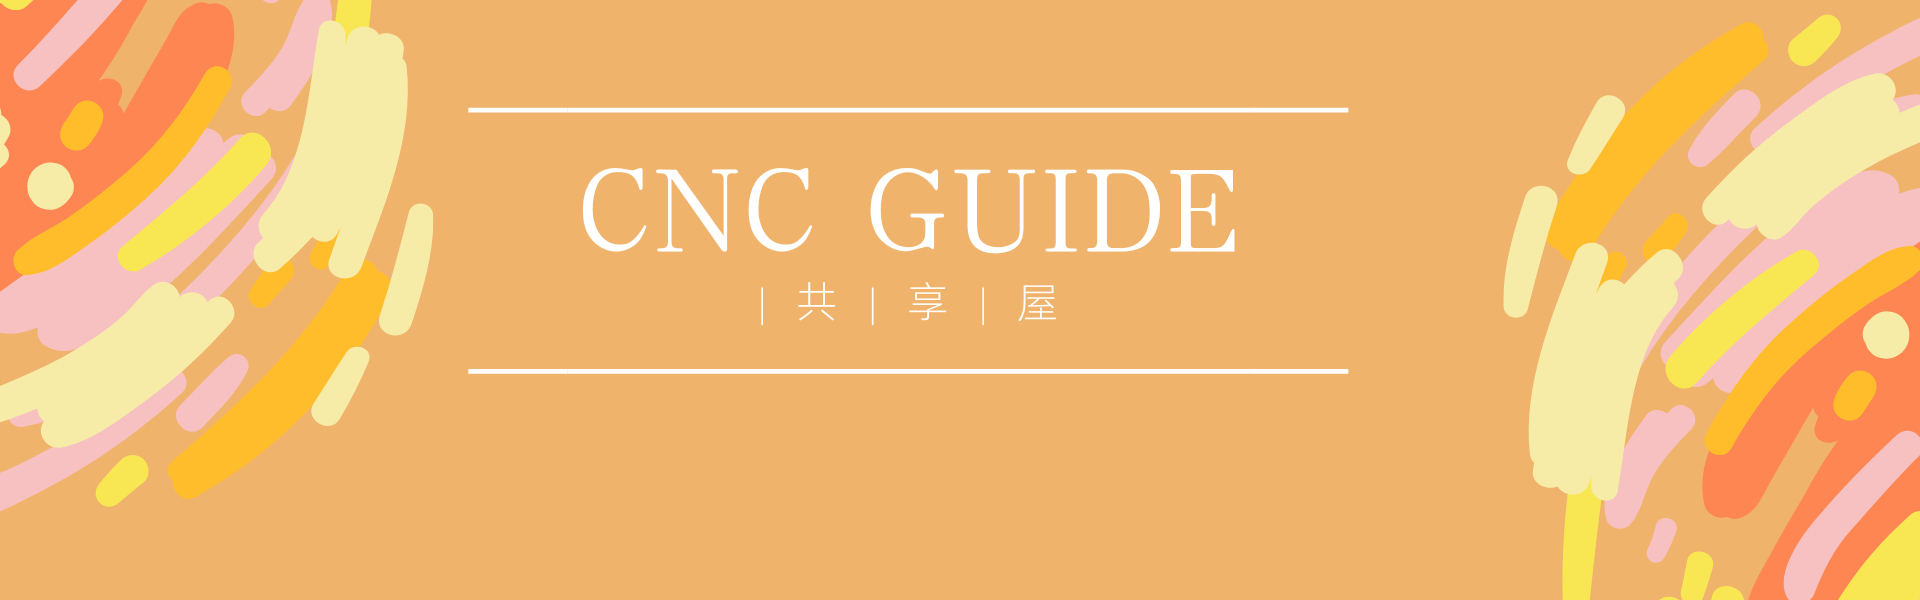 FANUC NC Guide/NC GuidePro Software - FANUC CNC-FANUC CNC